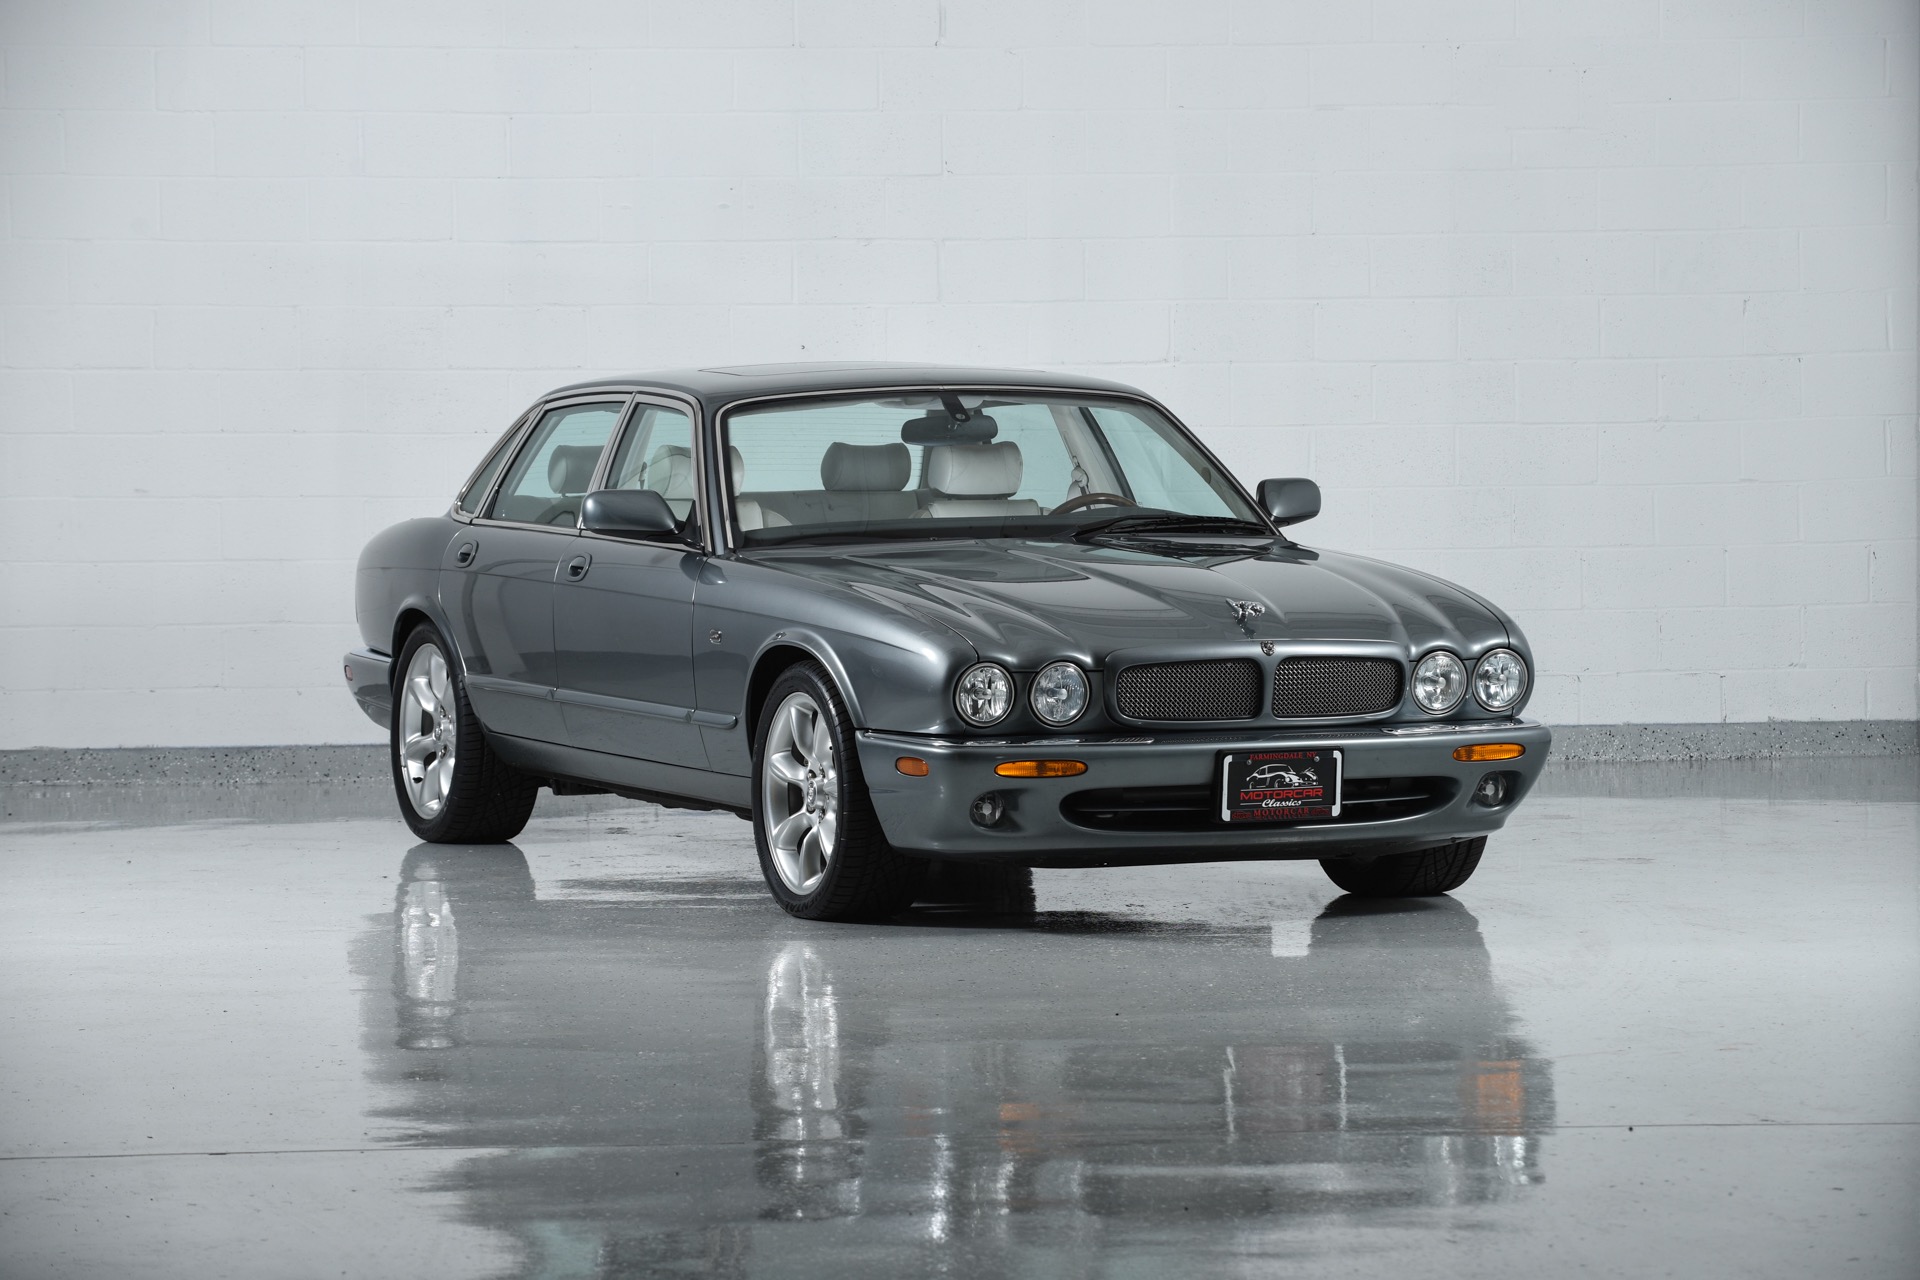 Used 2003 Jaguar XJR For Sale ($29,500) | Motorcar Classics Stock #1489